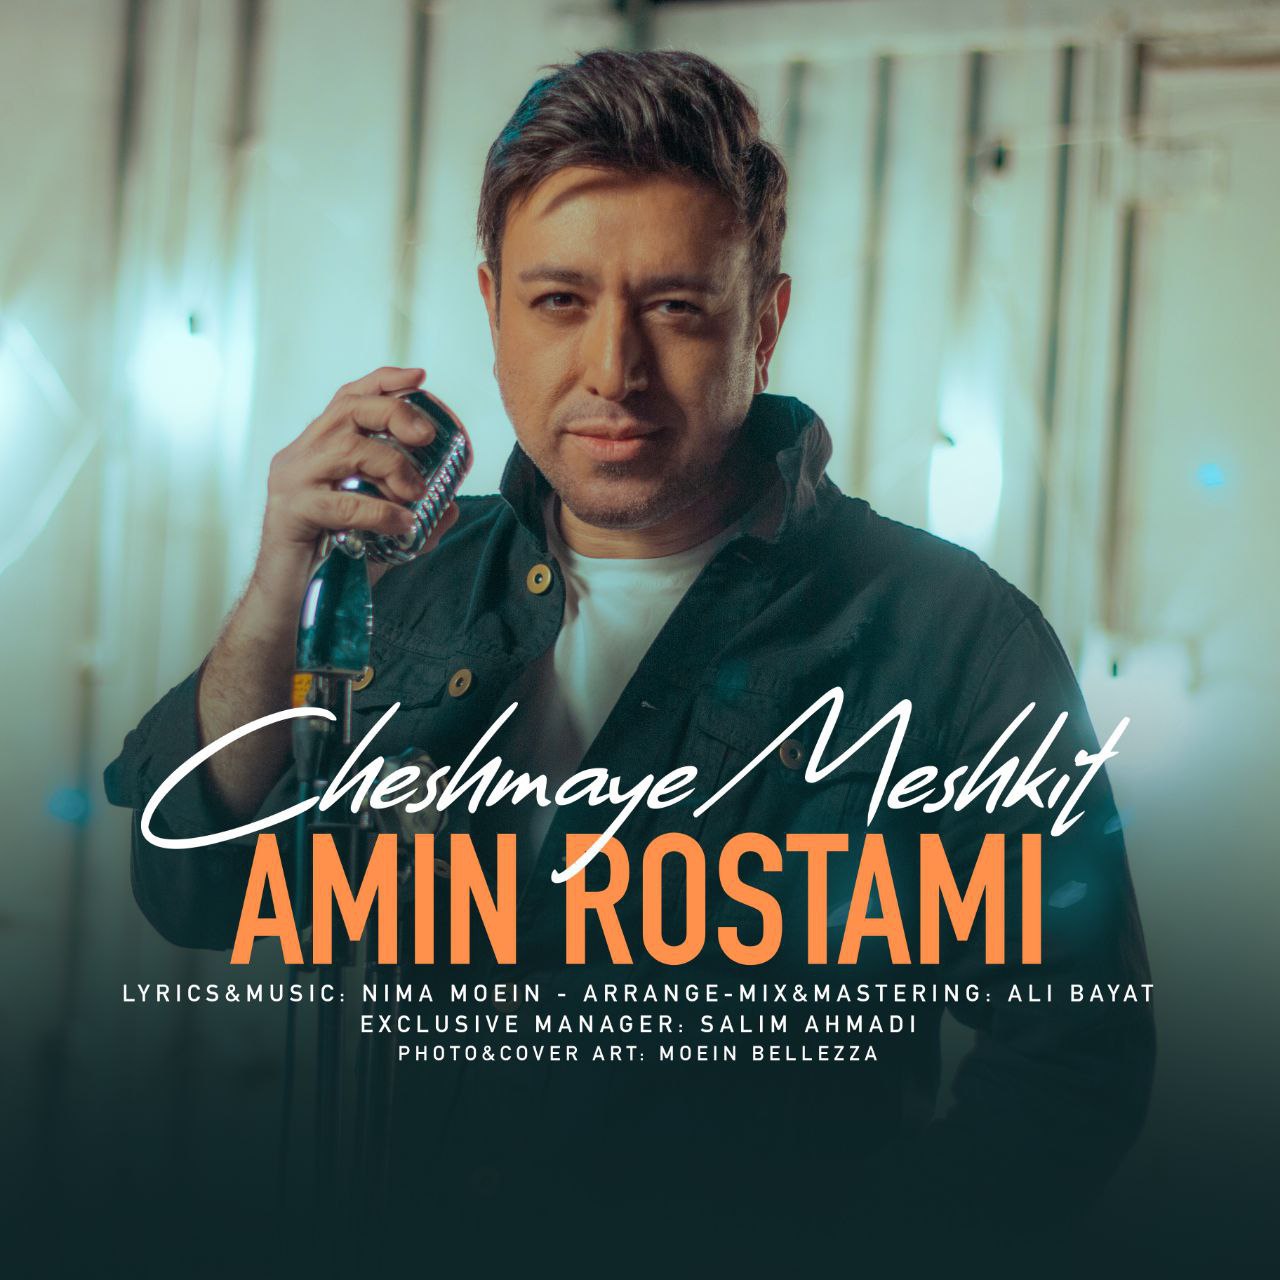 Amin Rostami - Cheshmaye Meshkit - دانلود آهنگ امین رستمی به نام چشمای مشکیت 